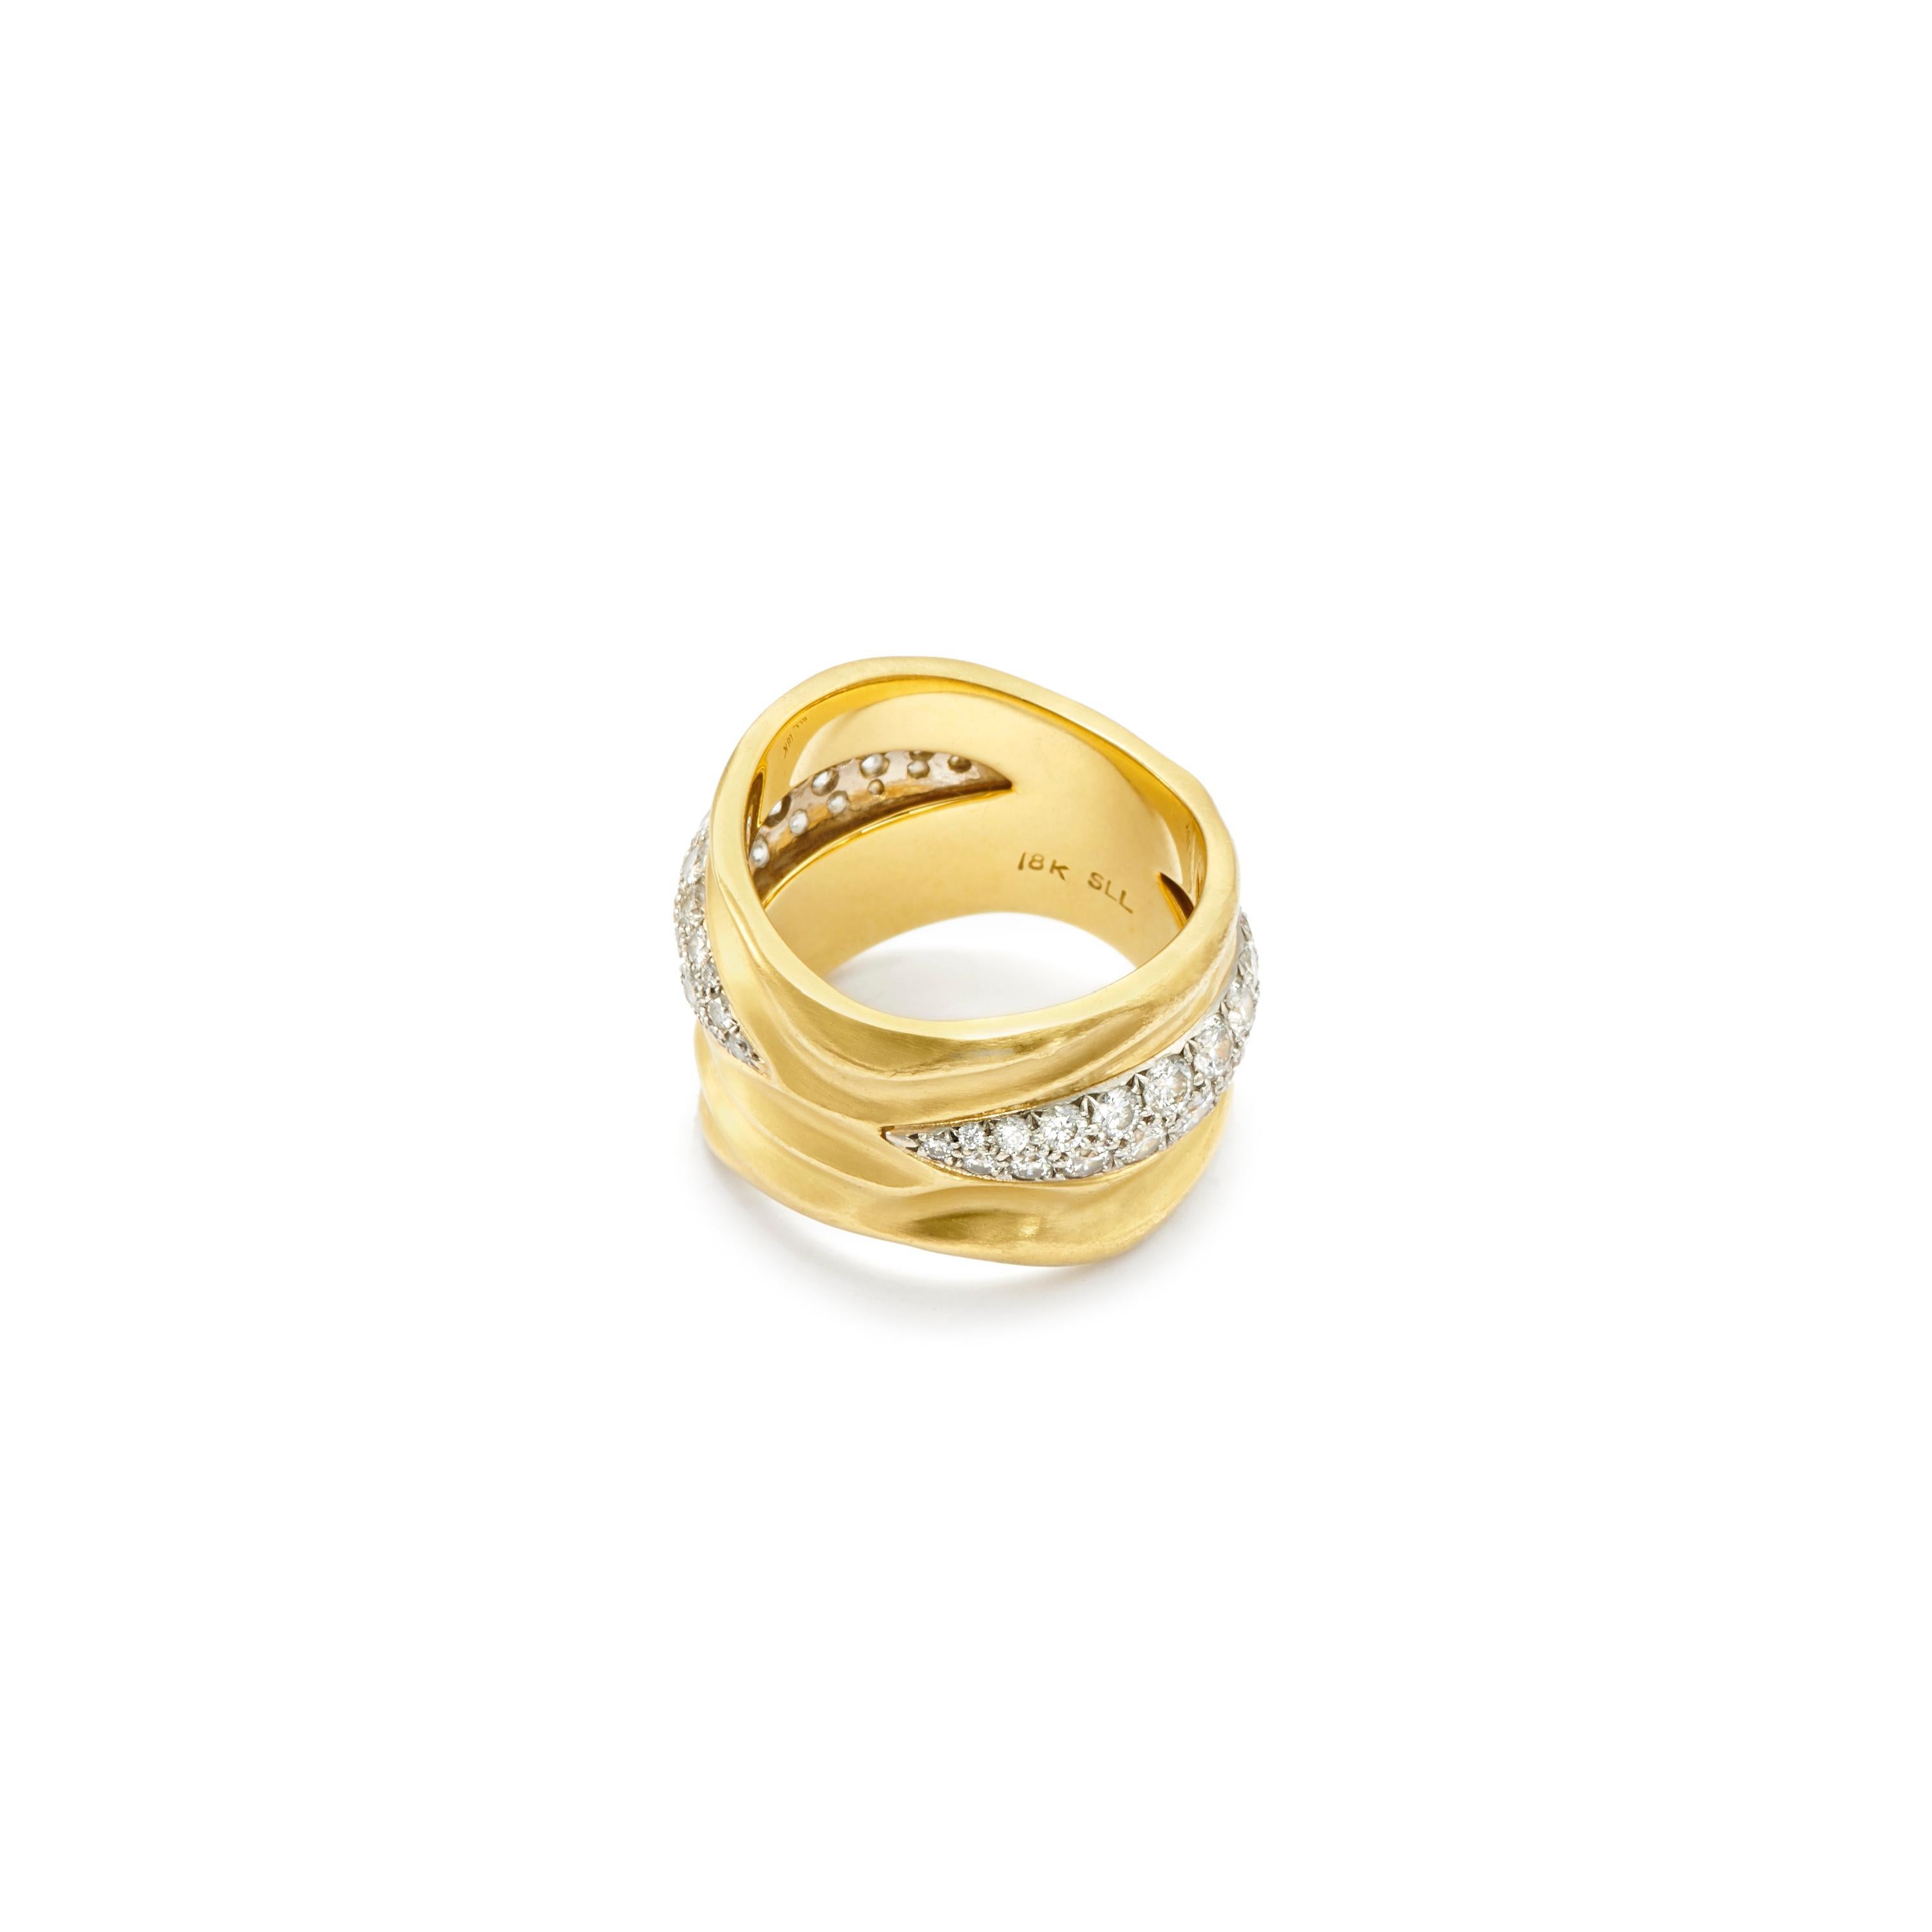 Contemporary Susan Lister Locke 18K Gold Burst Ring with 1.80 Carat Brilliant Cut Diamonds